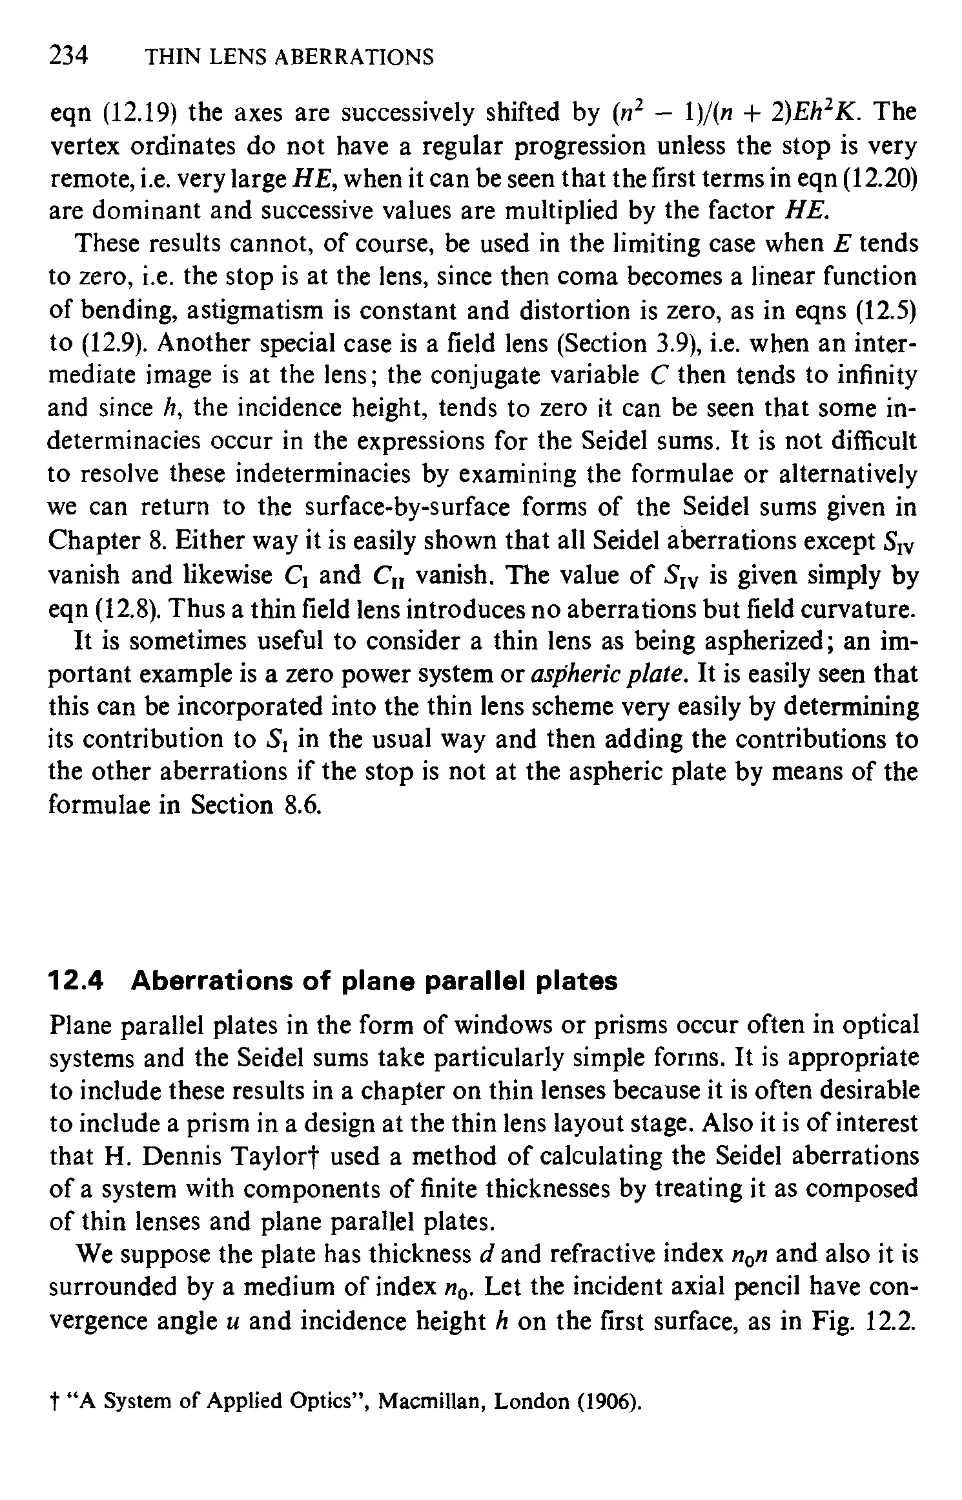 12.4 Aberrations of plane parallel plates